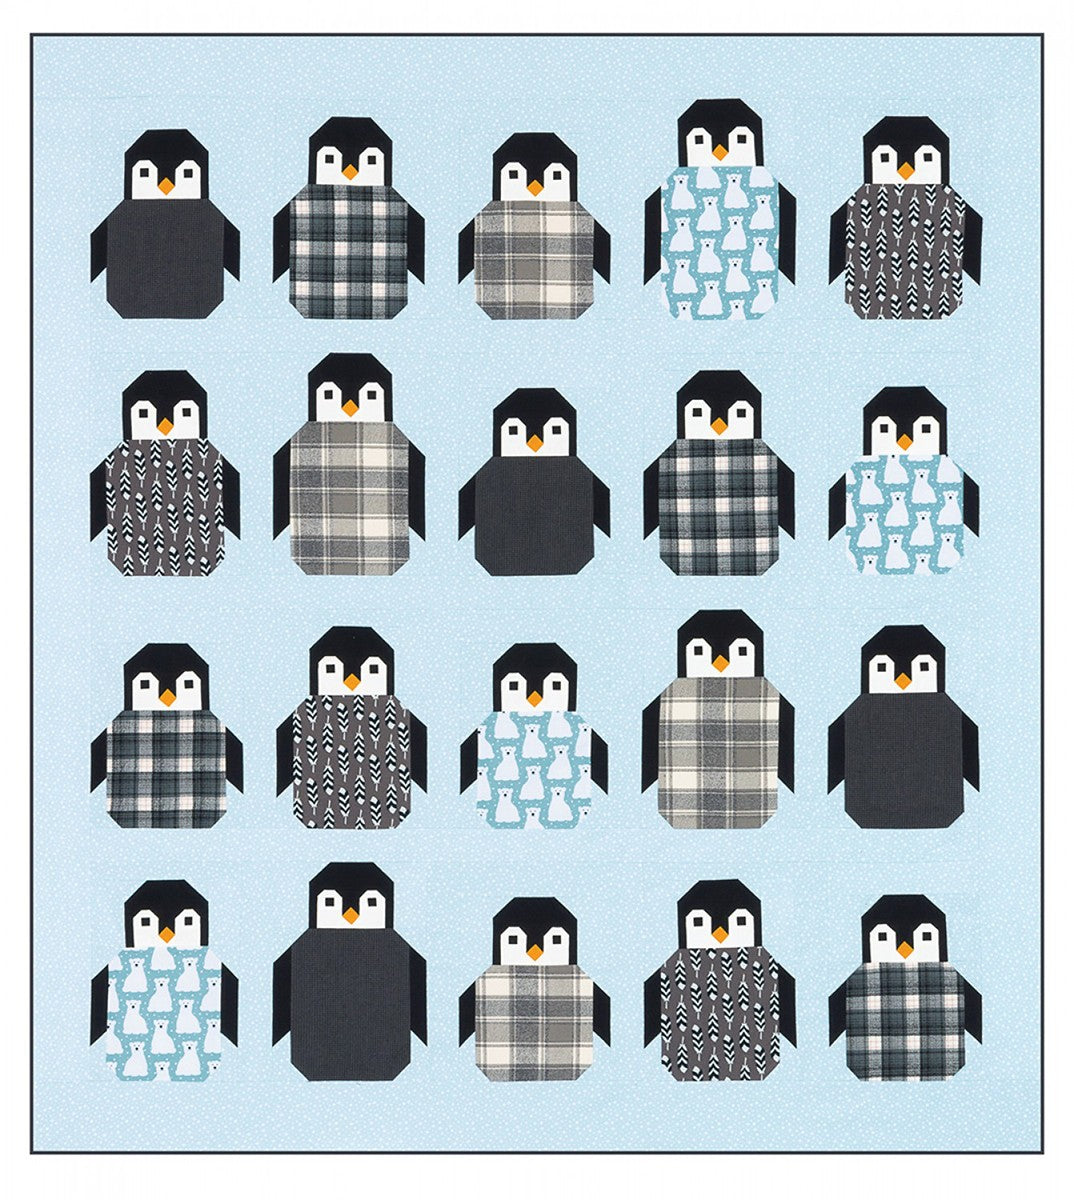 Penguin Party Pattern